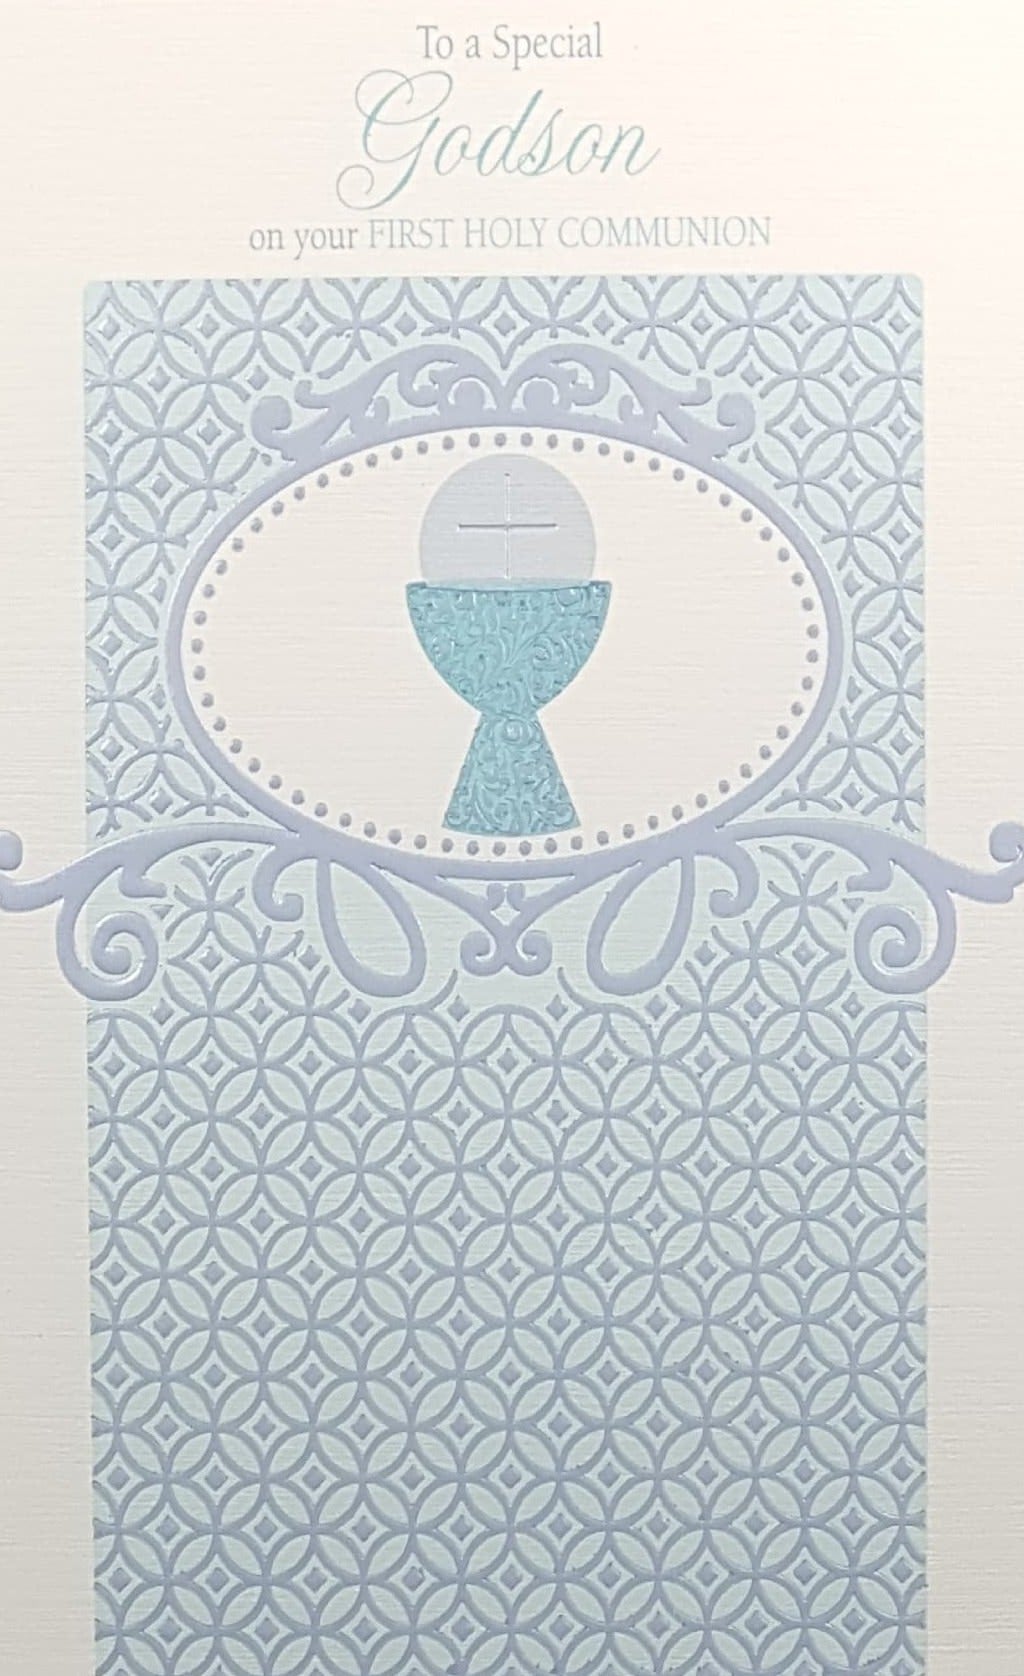 Communion Card - Godson / A Blue Patterned Front